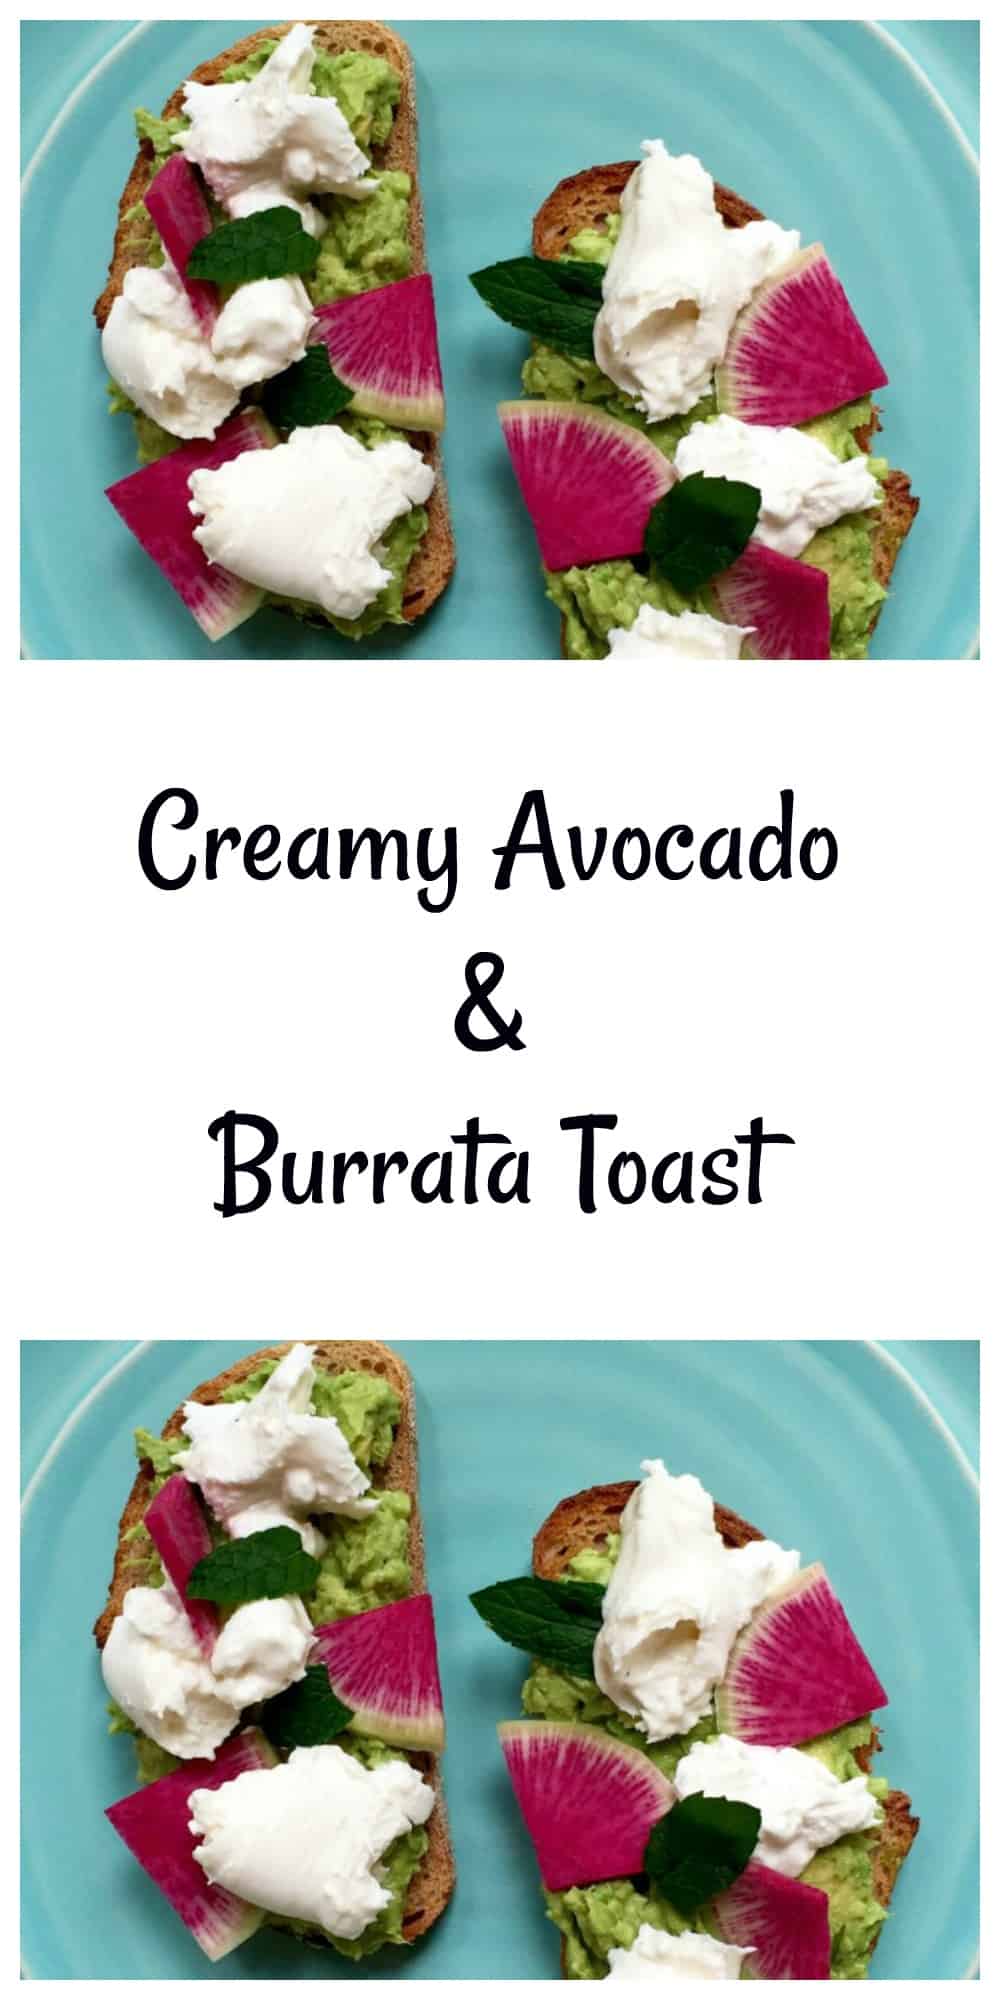 Avocado & Burrata Toast